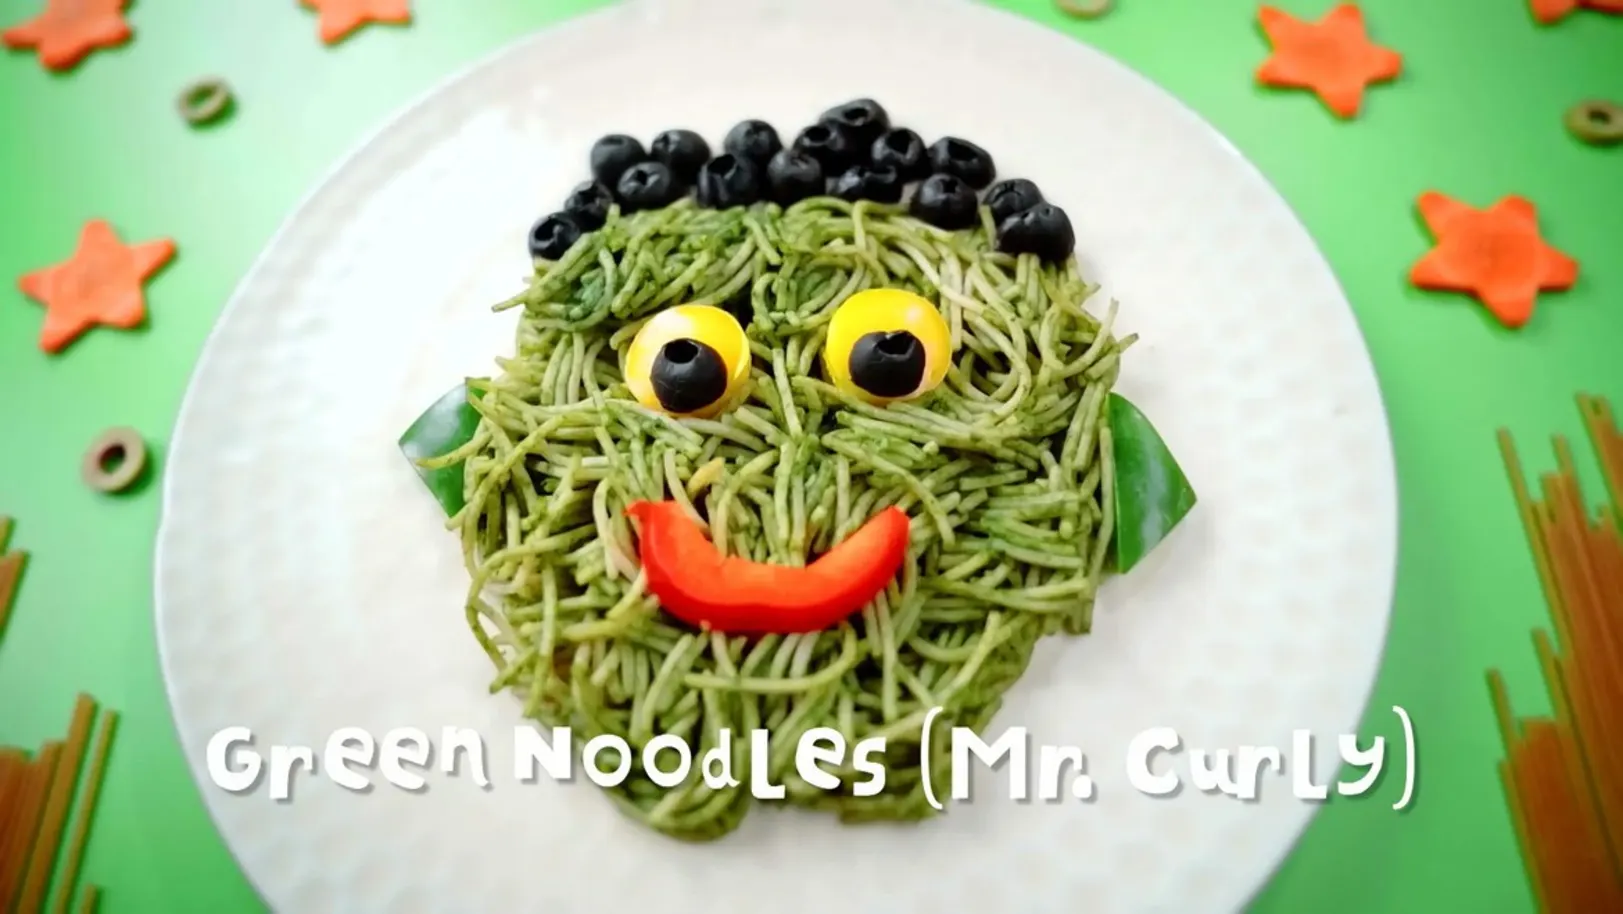 Tempting Curly Green Noodles | Junior Menu 